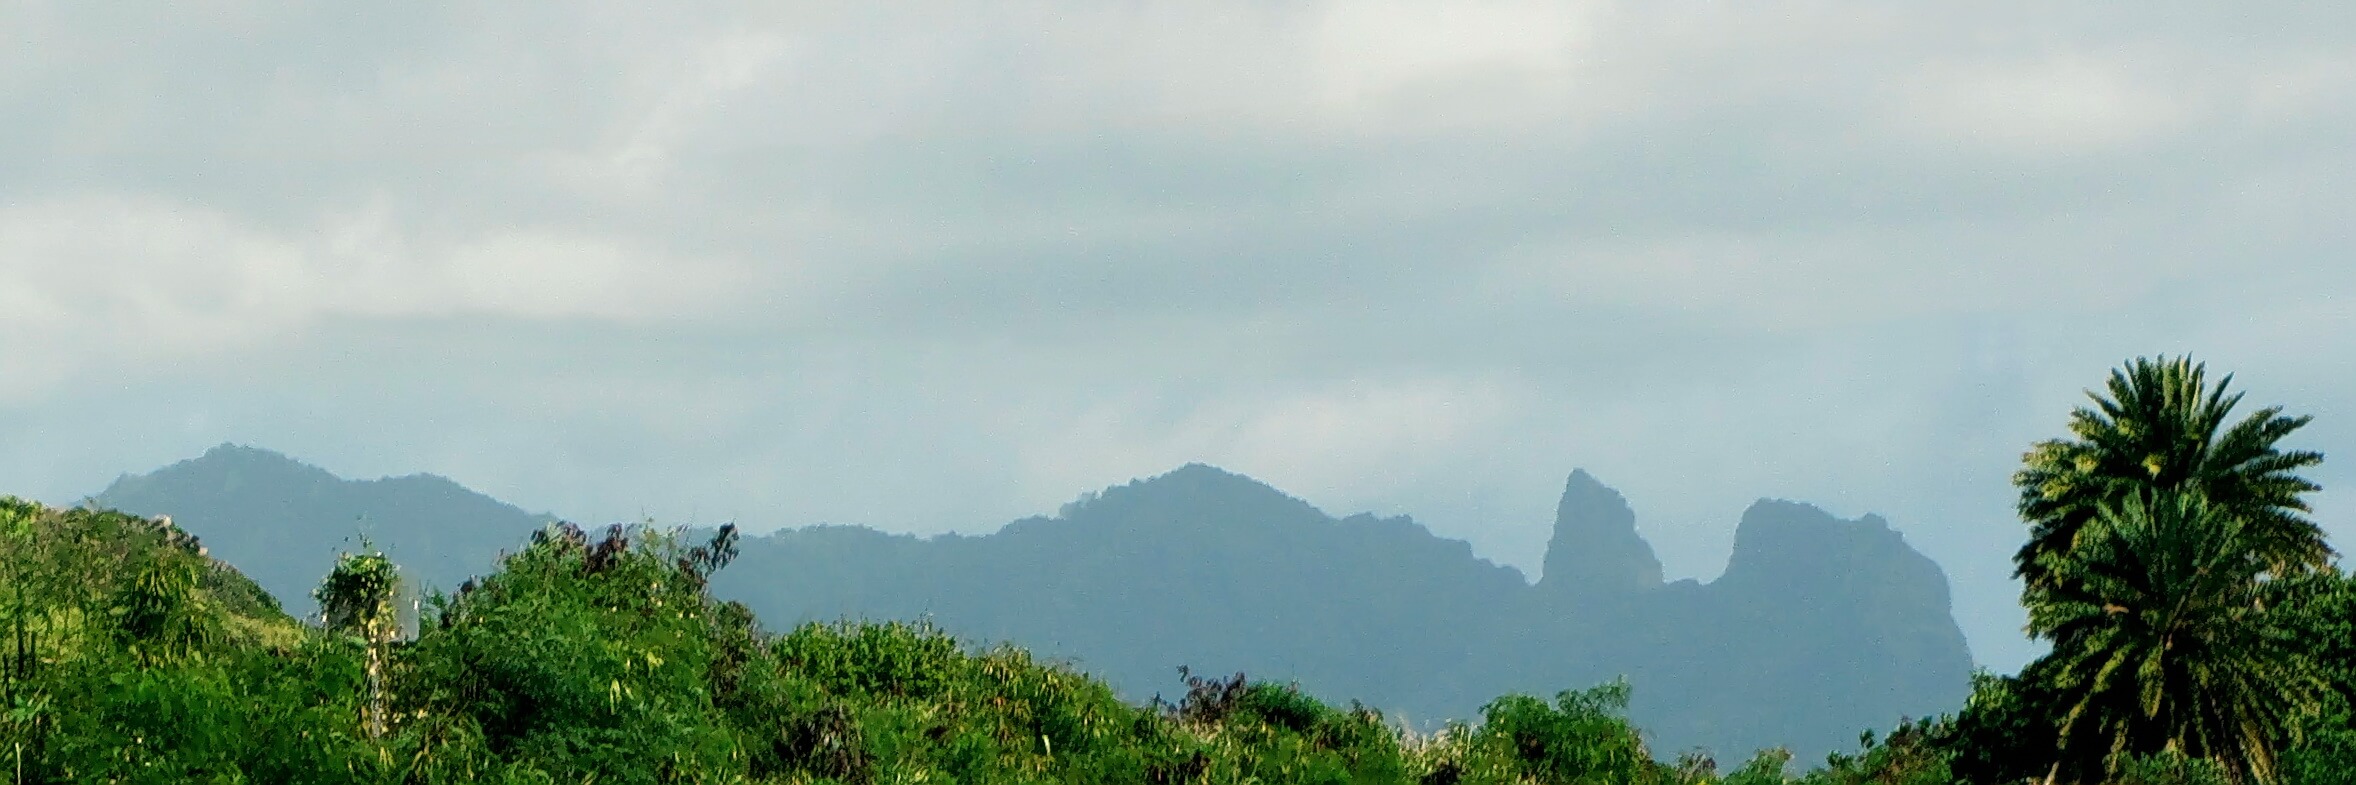 Kalalea Mountain - The World Famous King Kong Peak